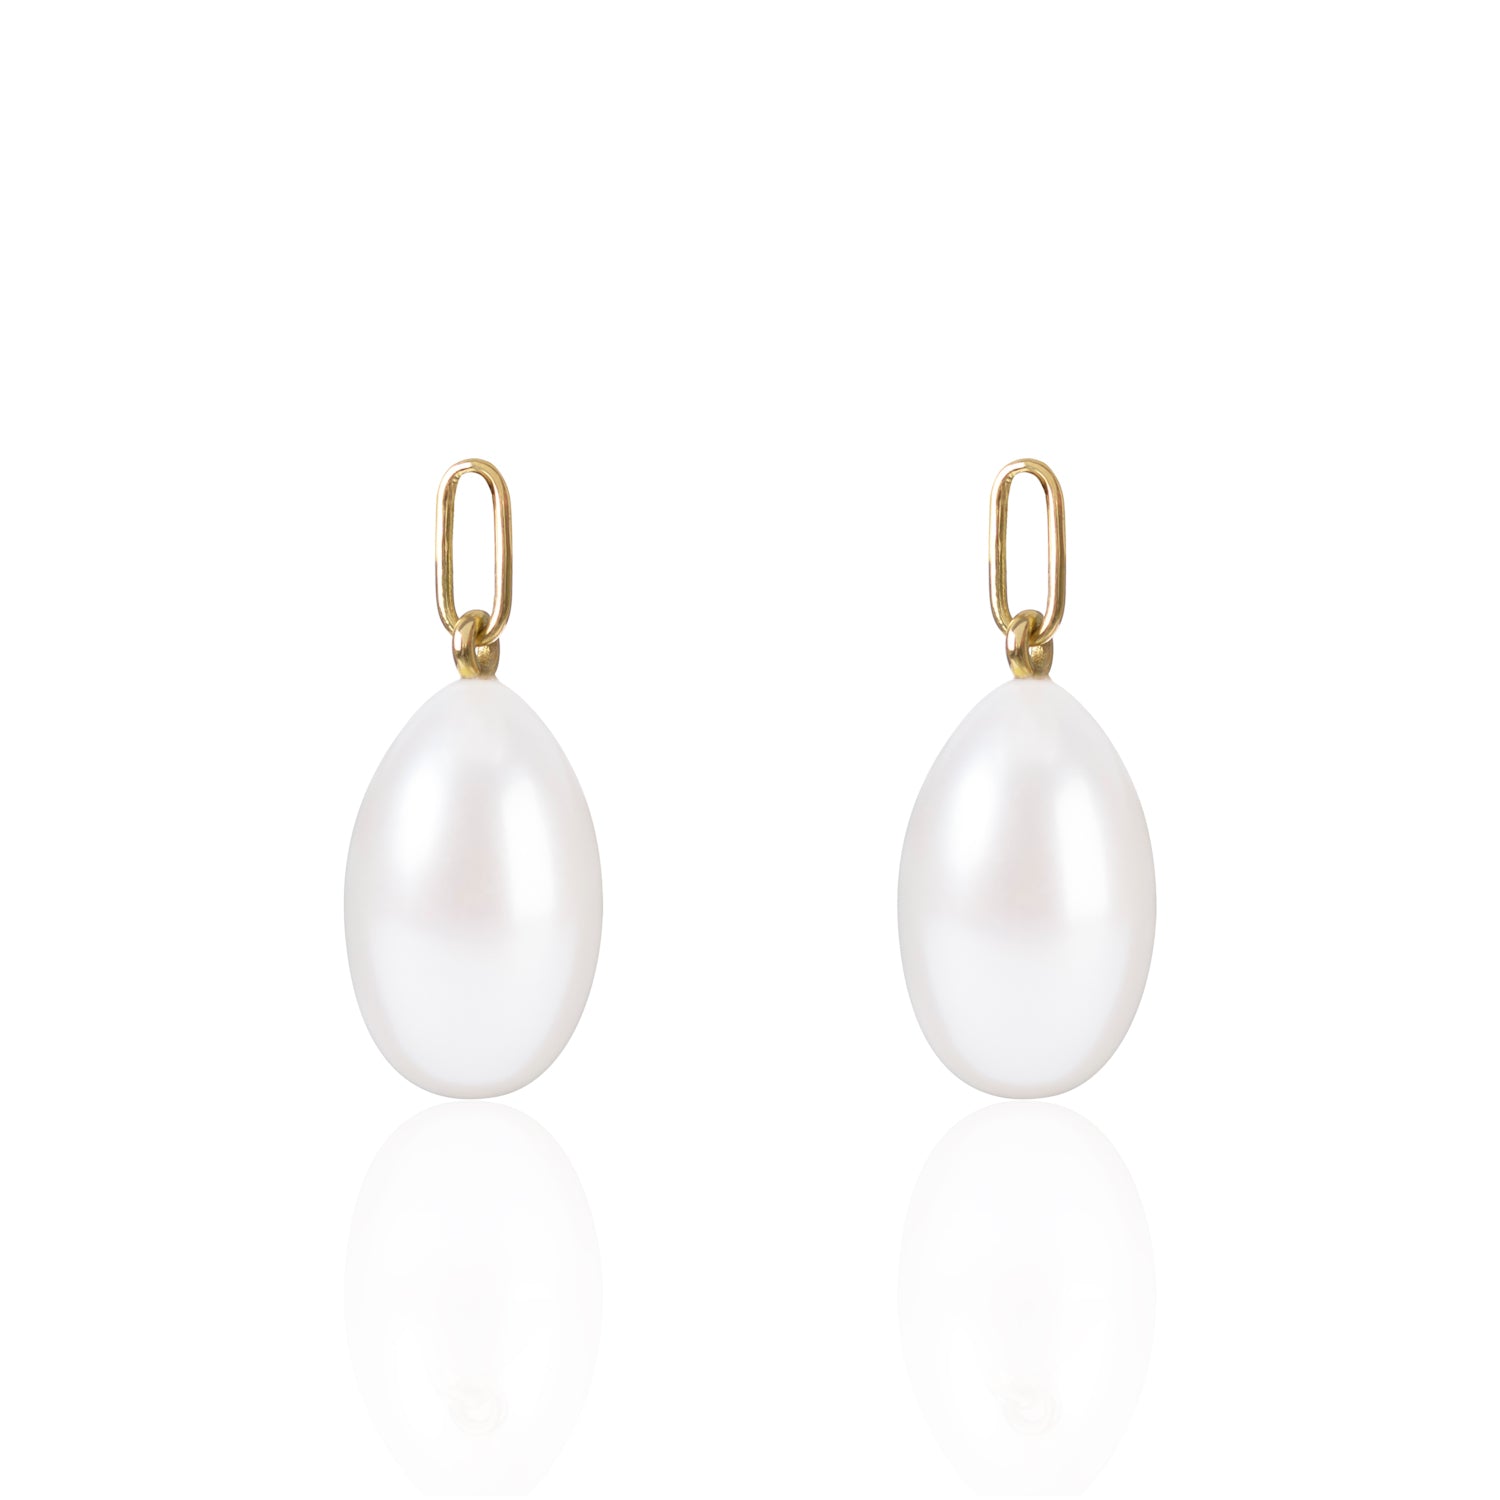 Elongated White Pearl Earring Pendants by McFarlane Fine Jewellery